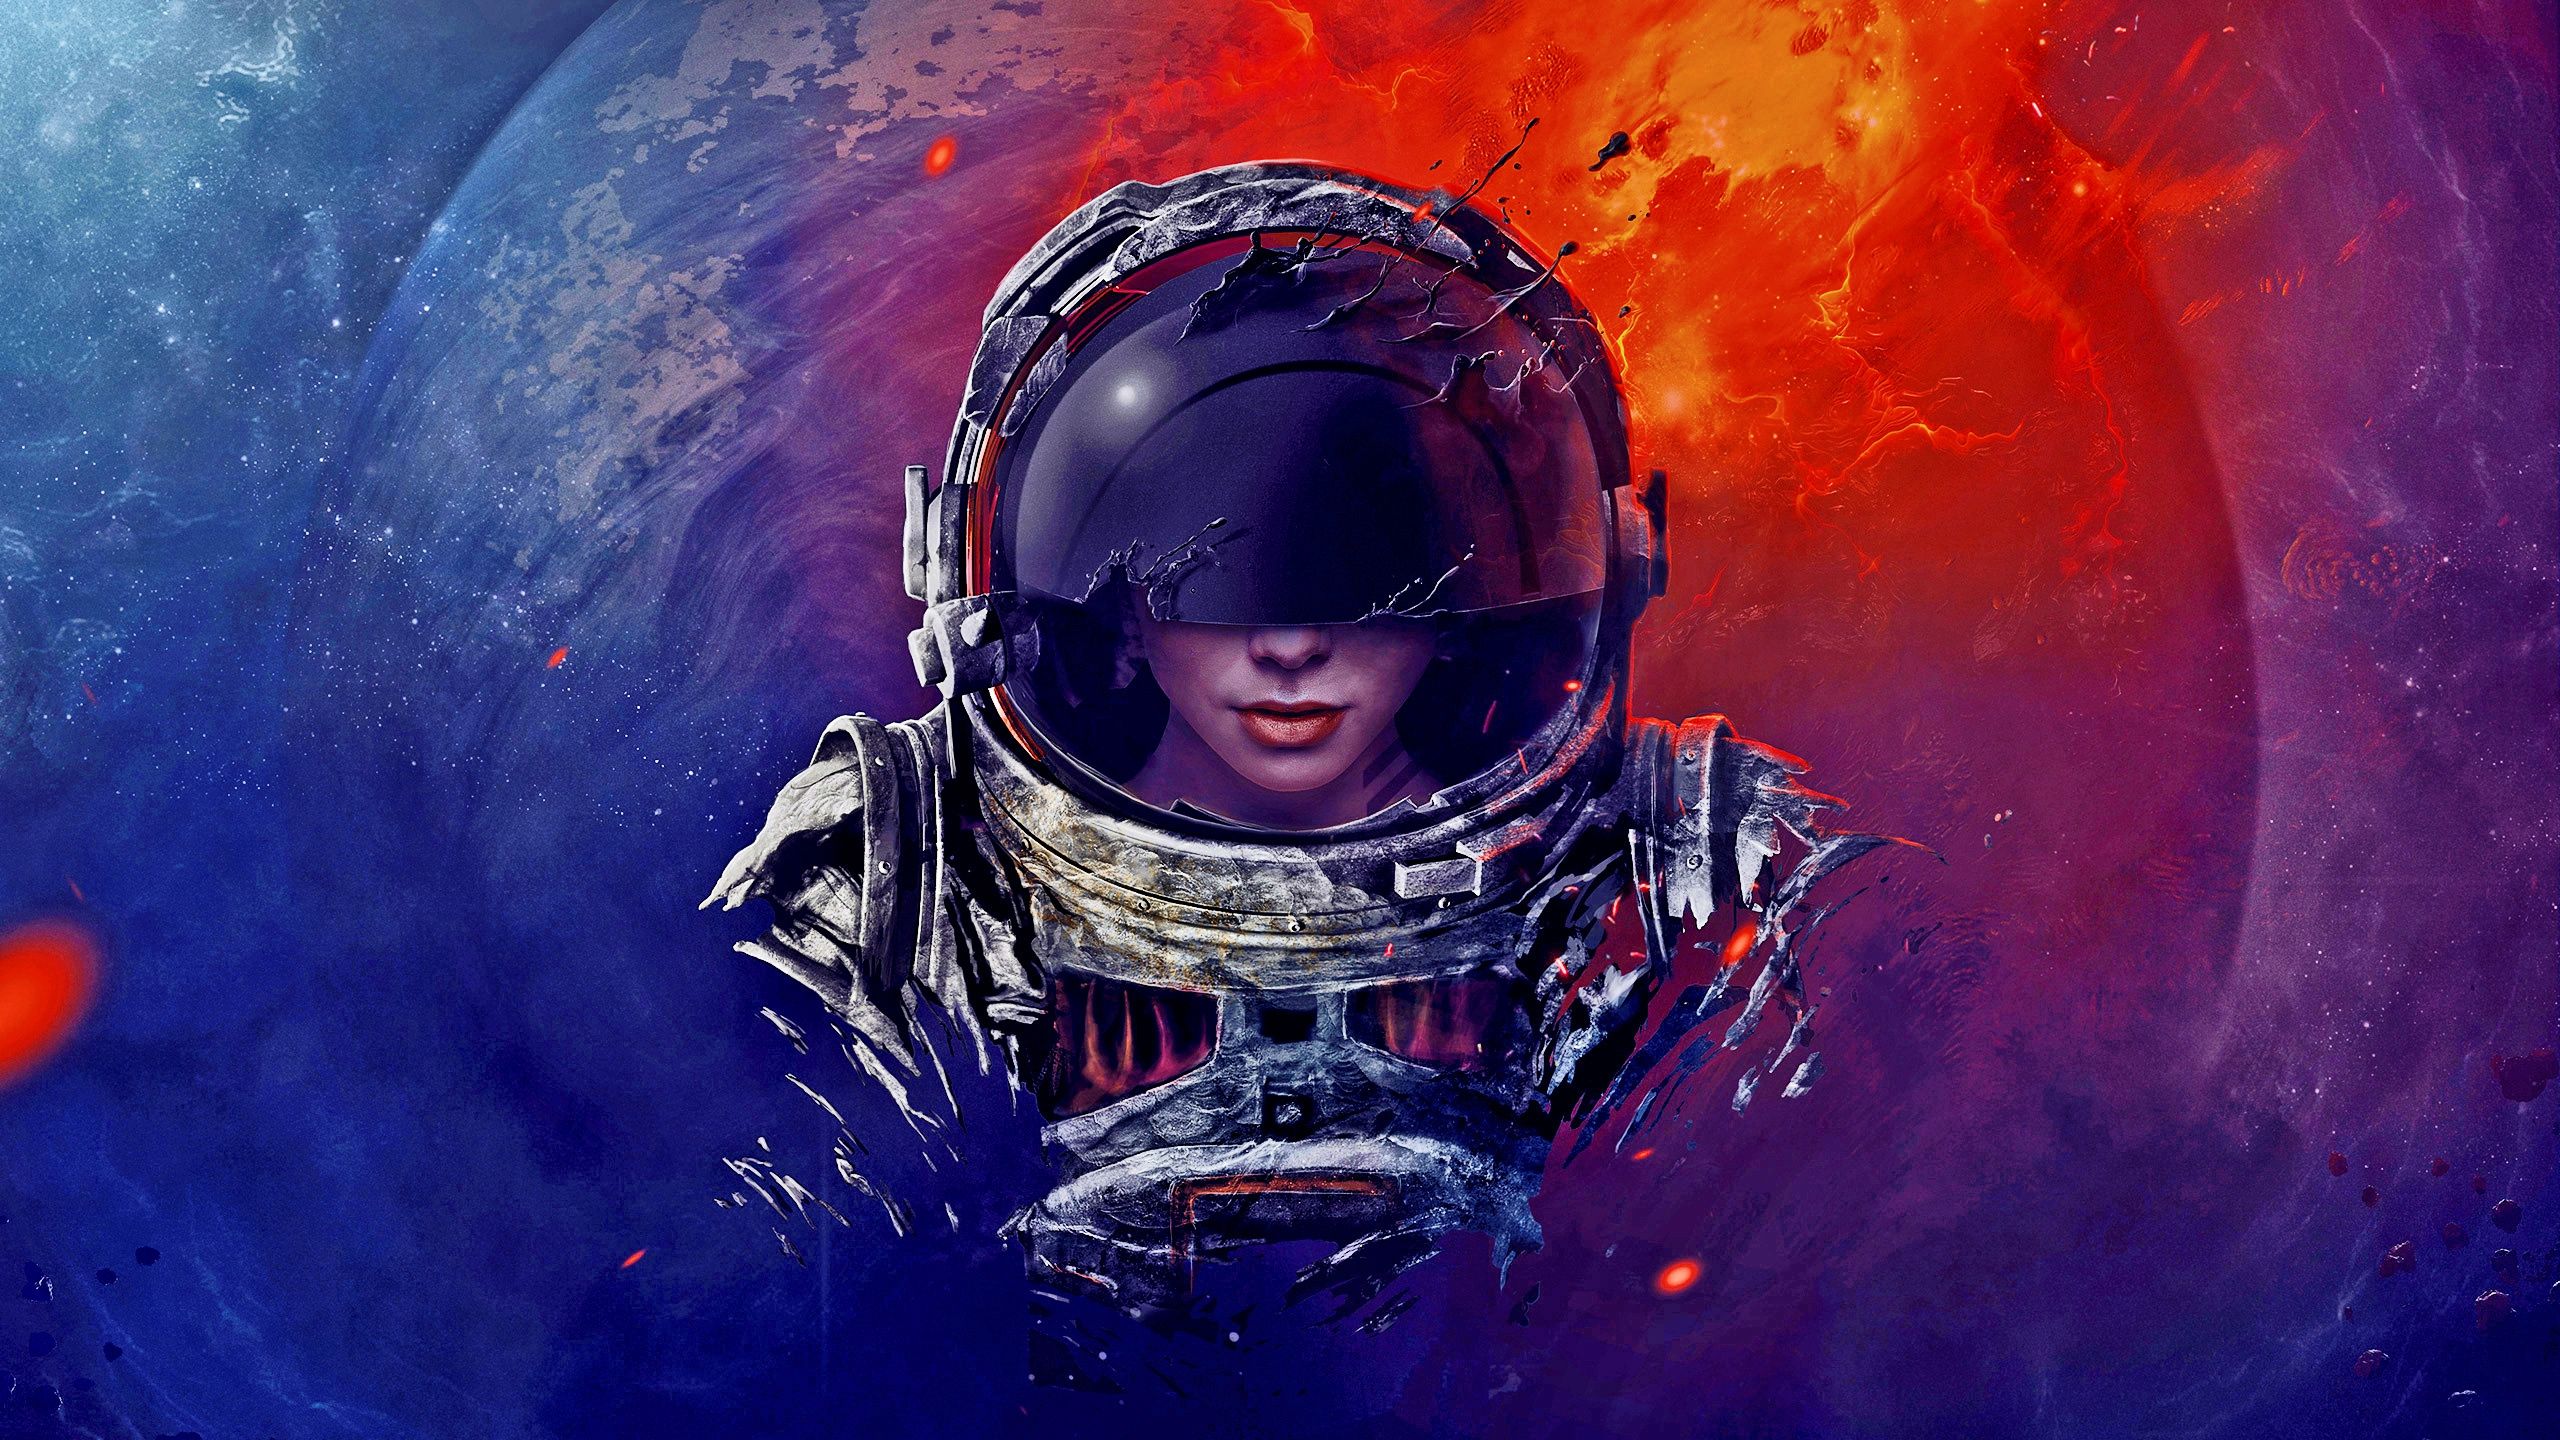 Aesthetic astronaut wallpaper 4k for desktop download free beautiful background images for your desktop, Powerpoint templates. - Astronaut